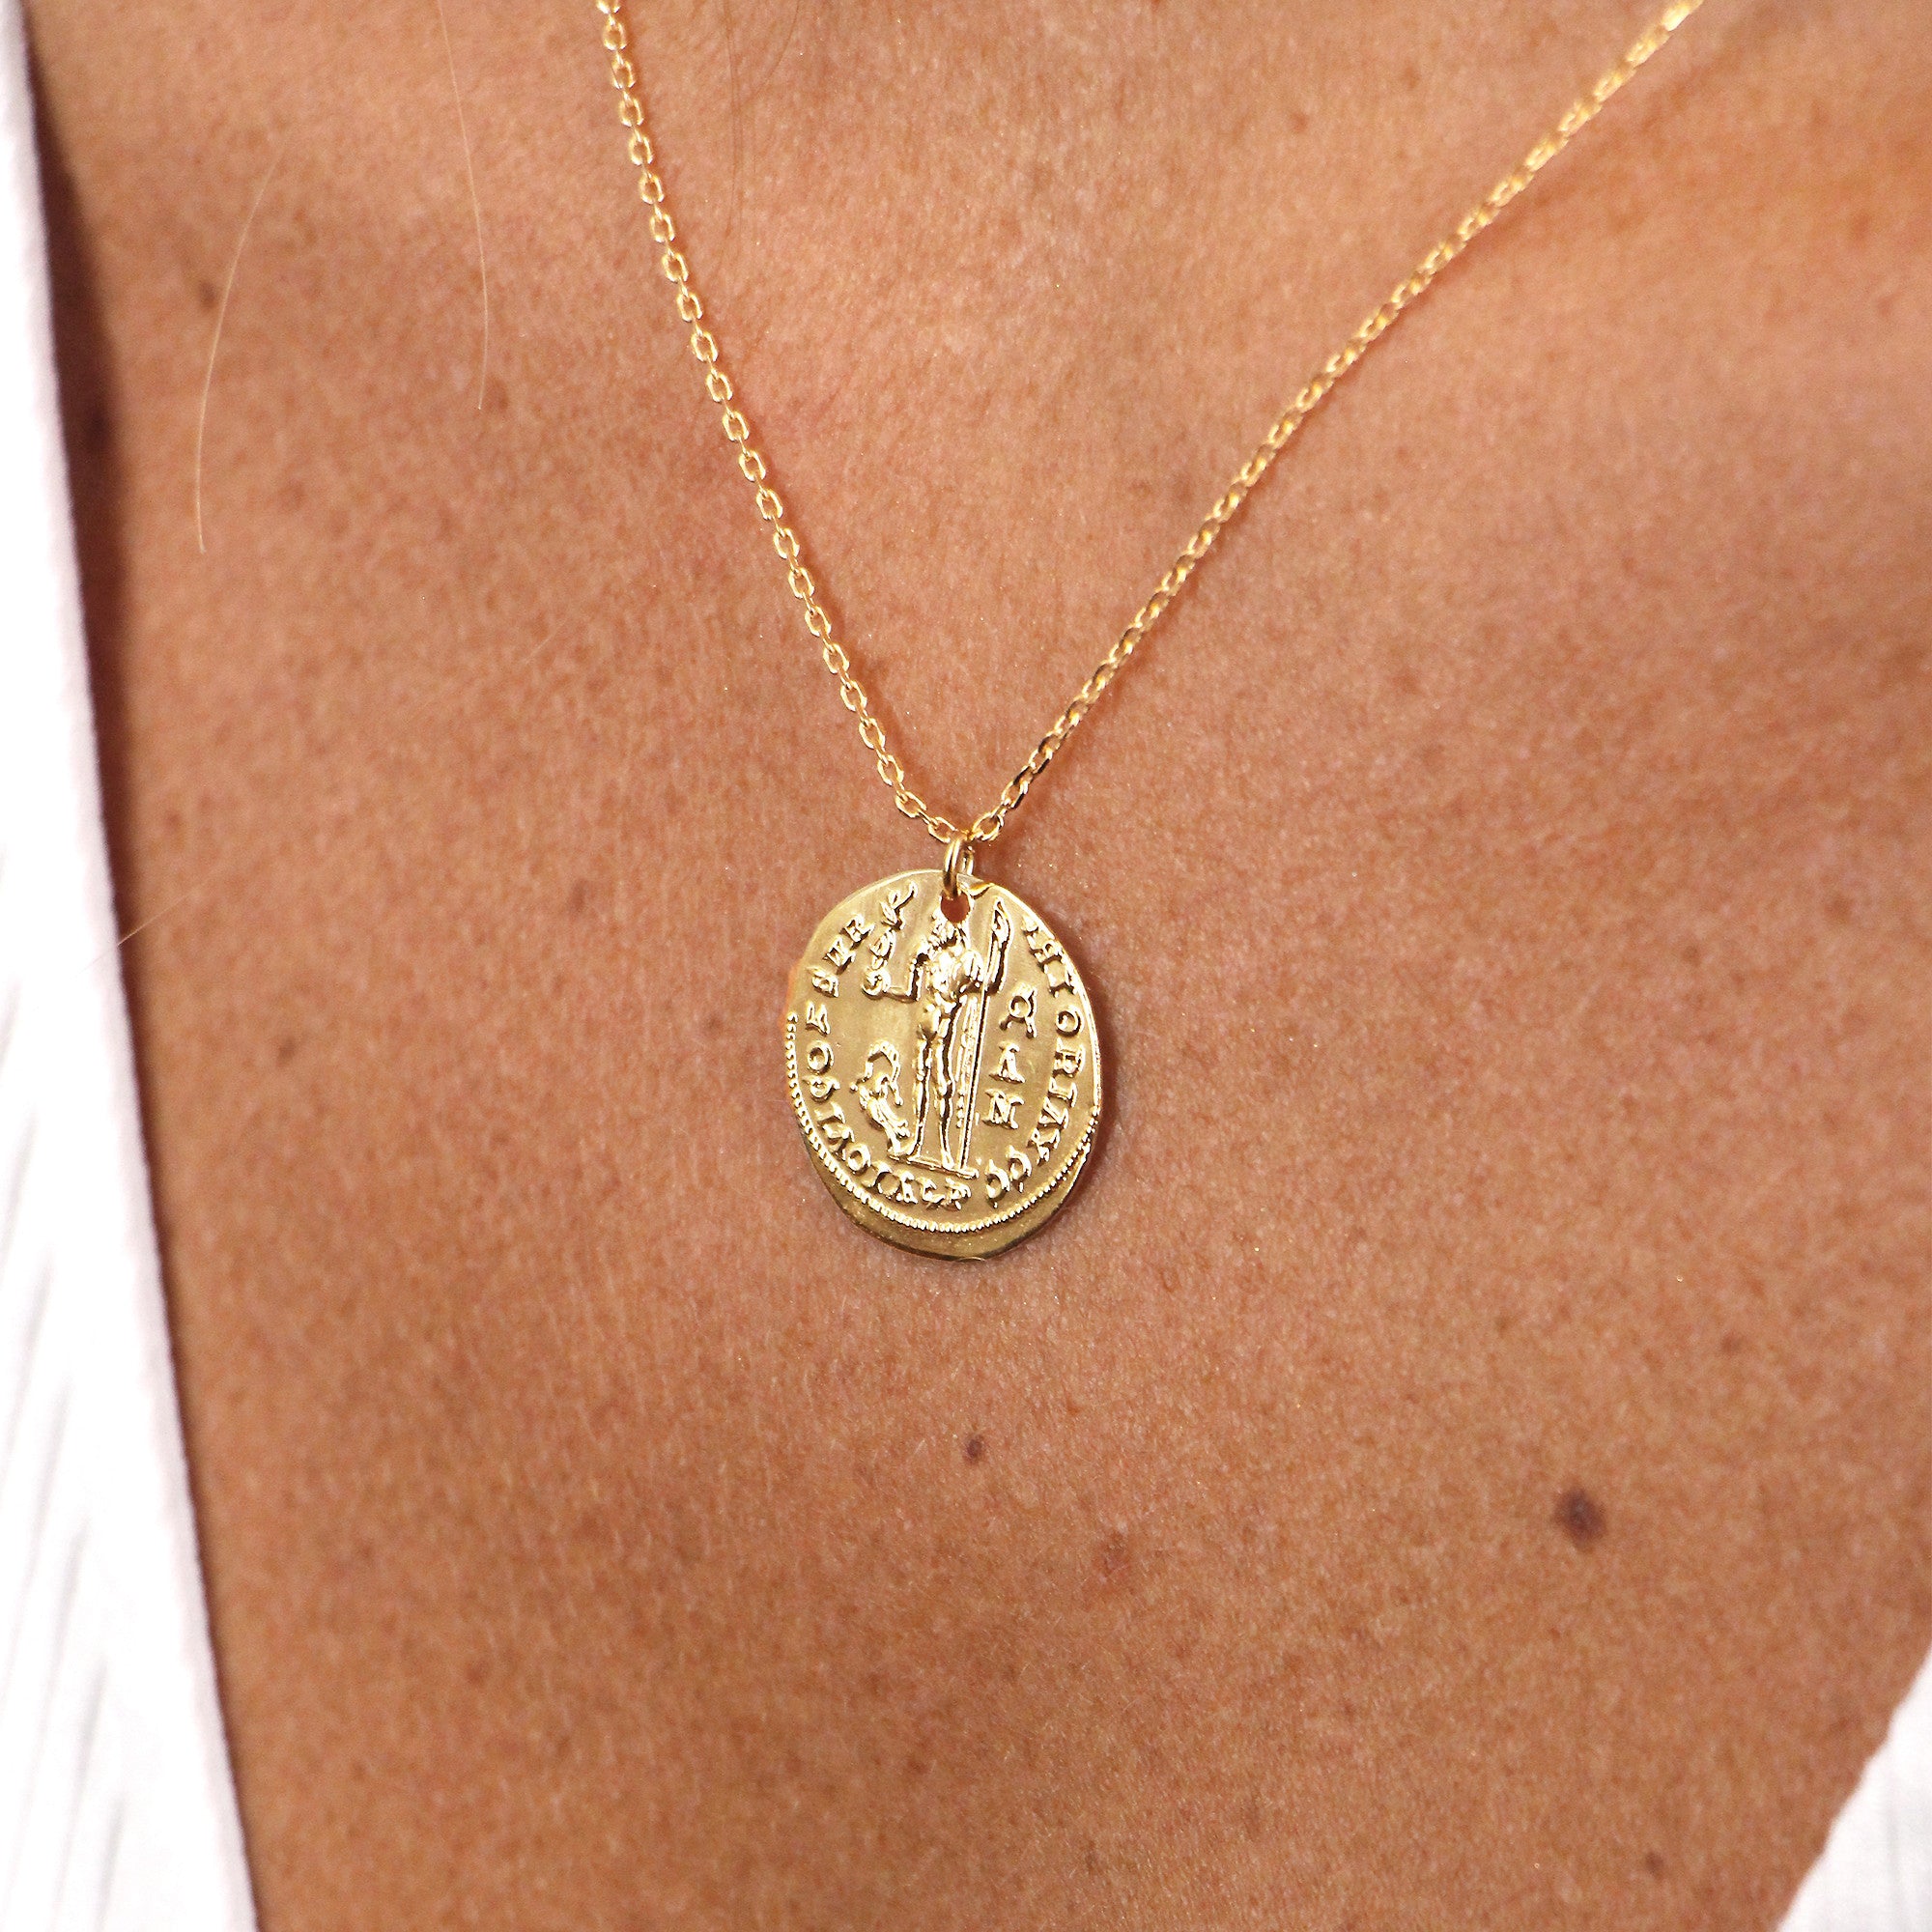 Osiris necklace